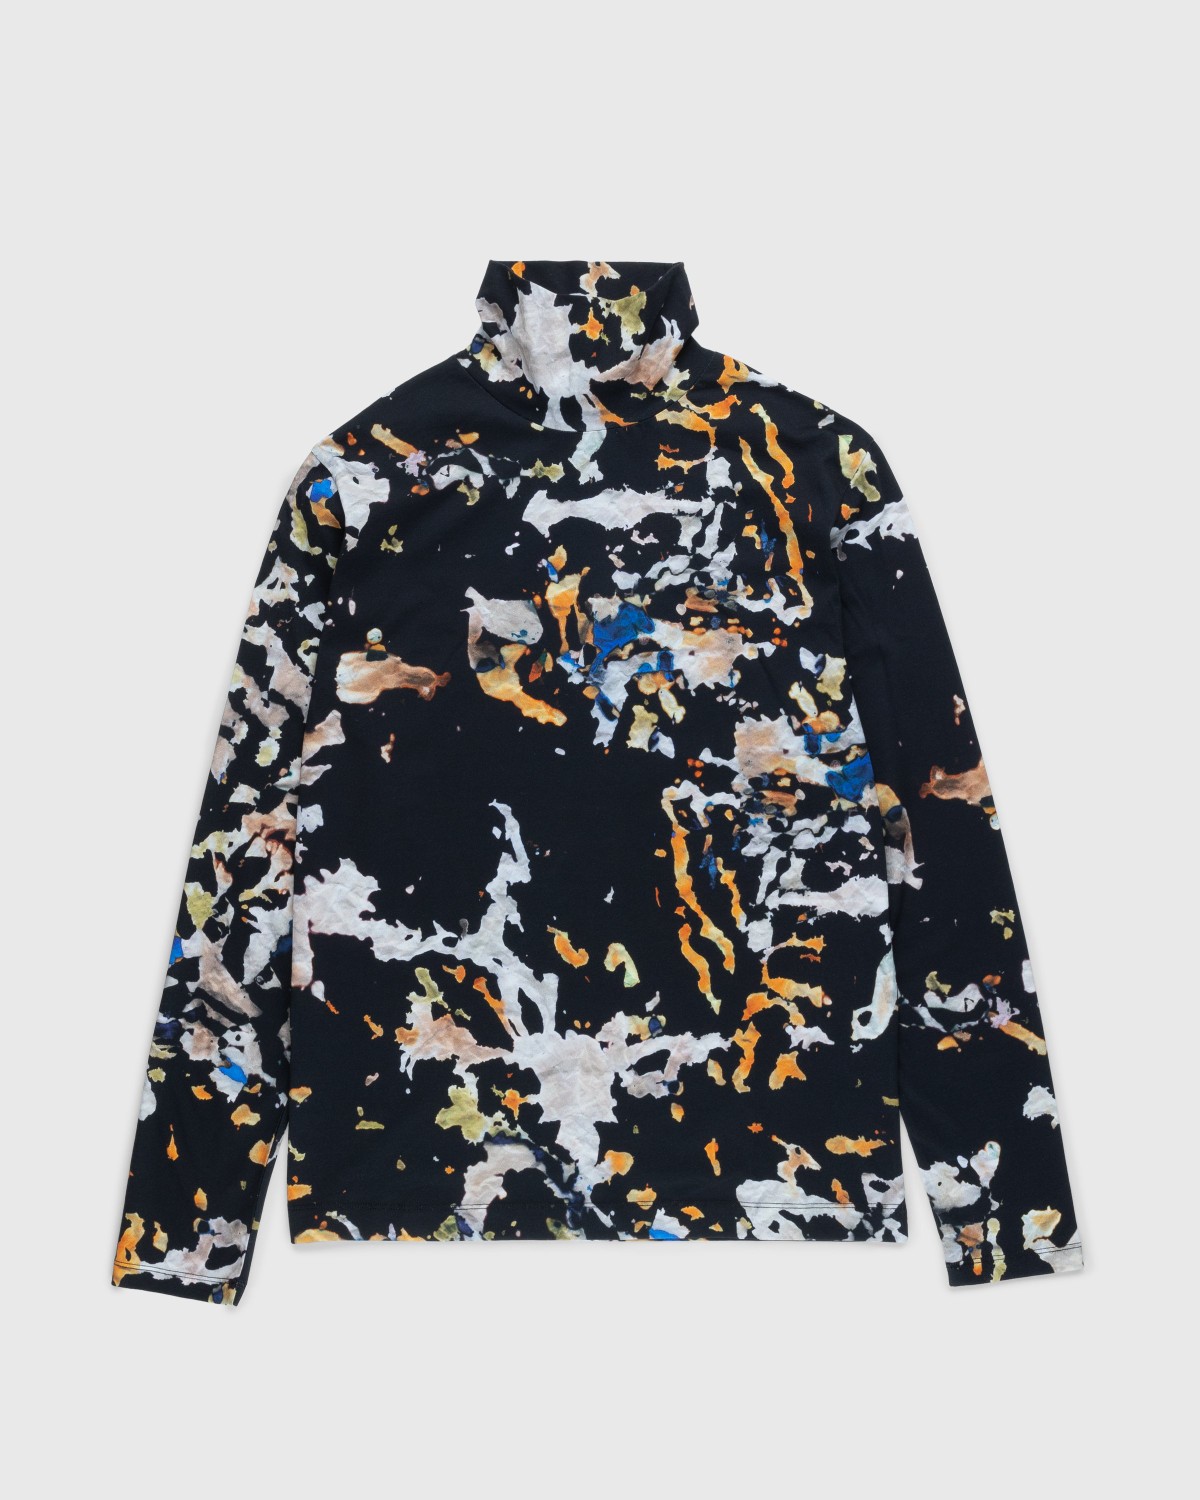 Dries van Noten – Heyzo Turtleneck Jersey Shirt Multi | Highsnobiety Shop